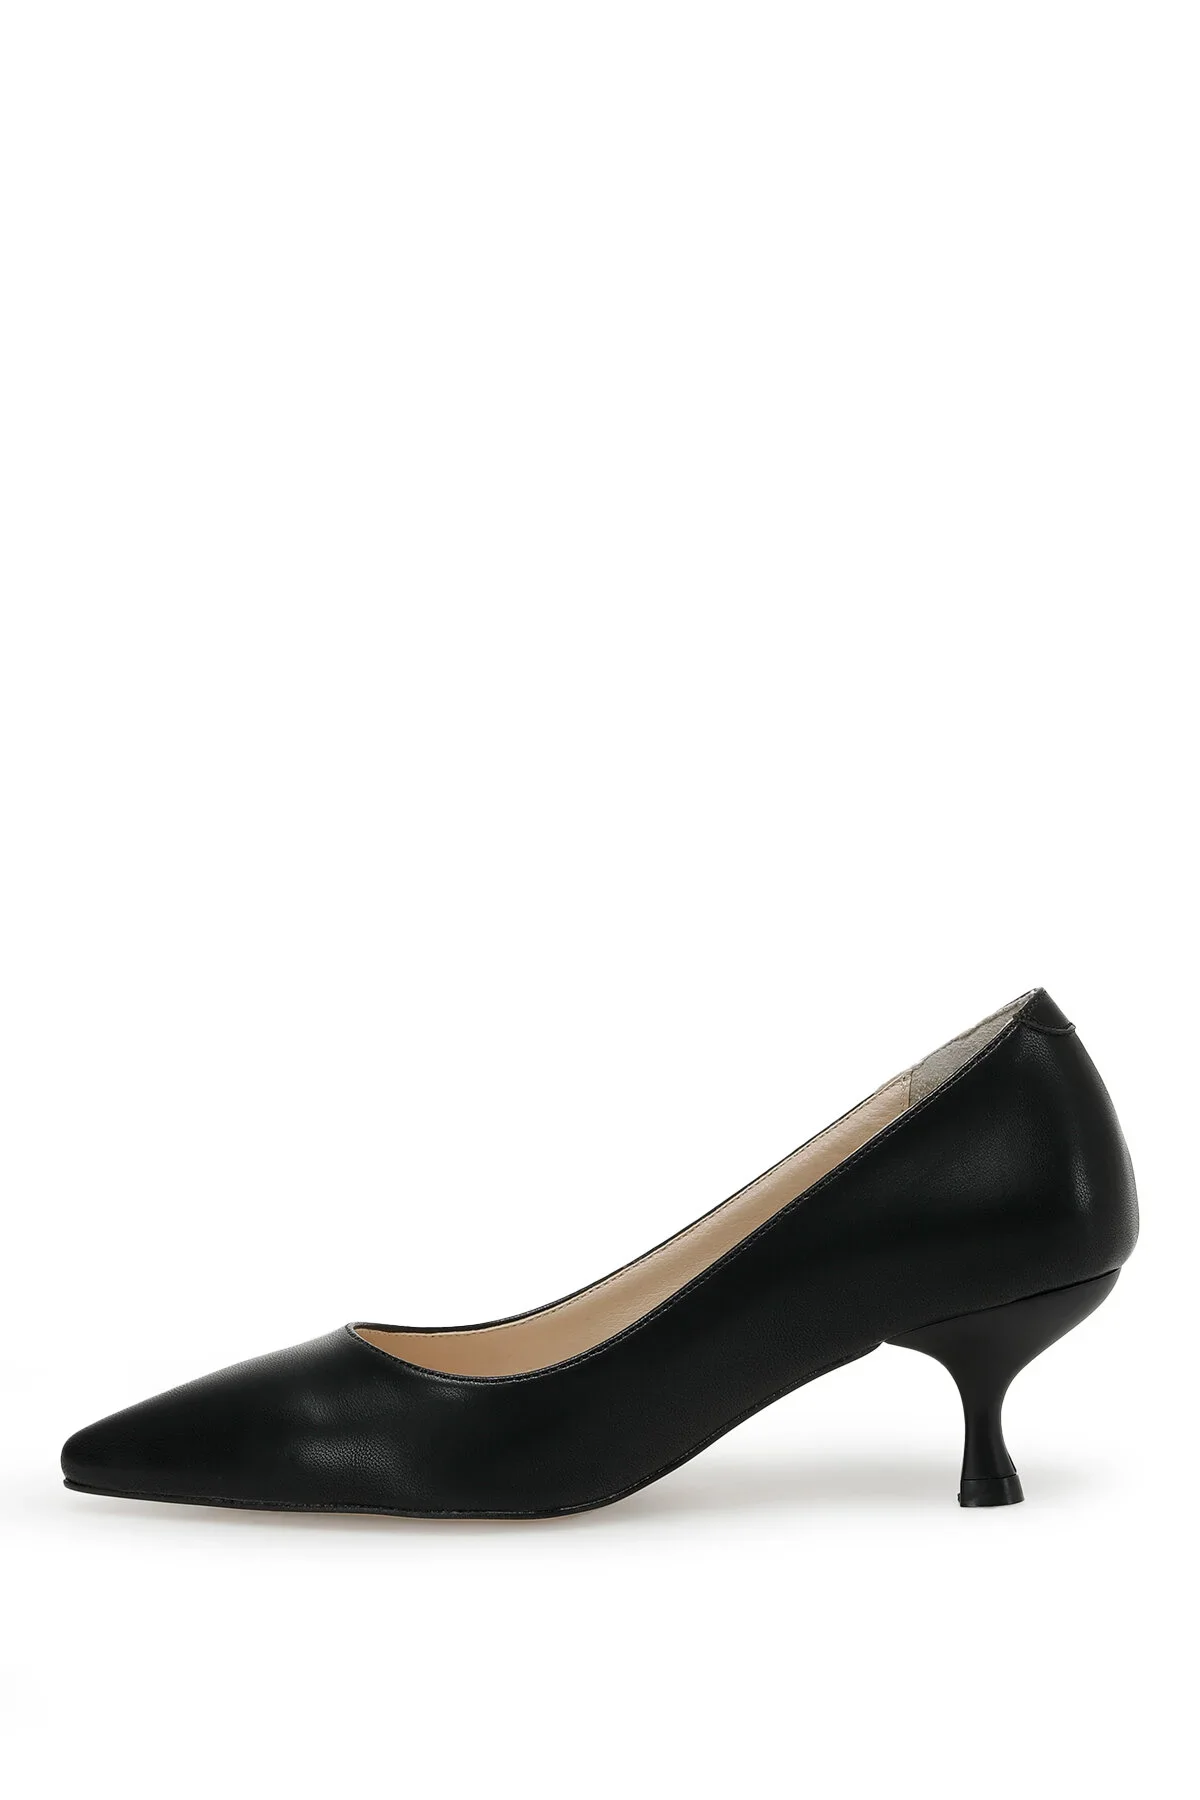 TRUDY 3FX Kadın Topuklu Ayakkabı-Siyah - 4